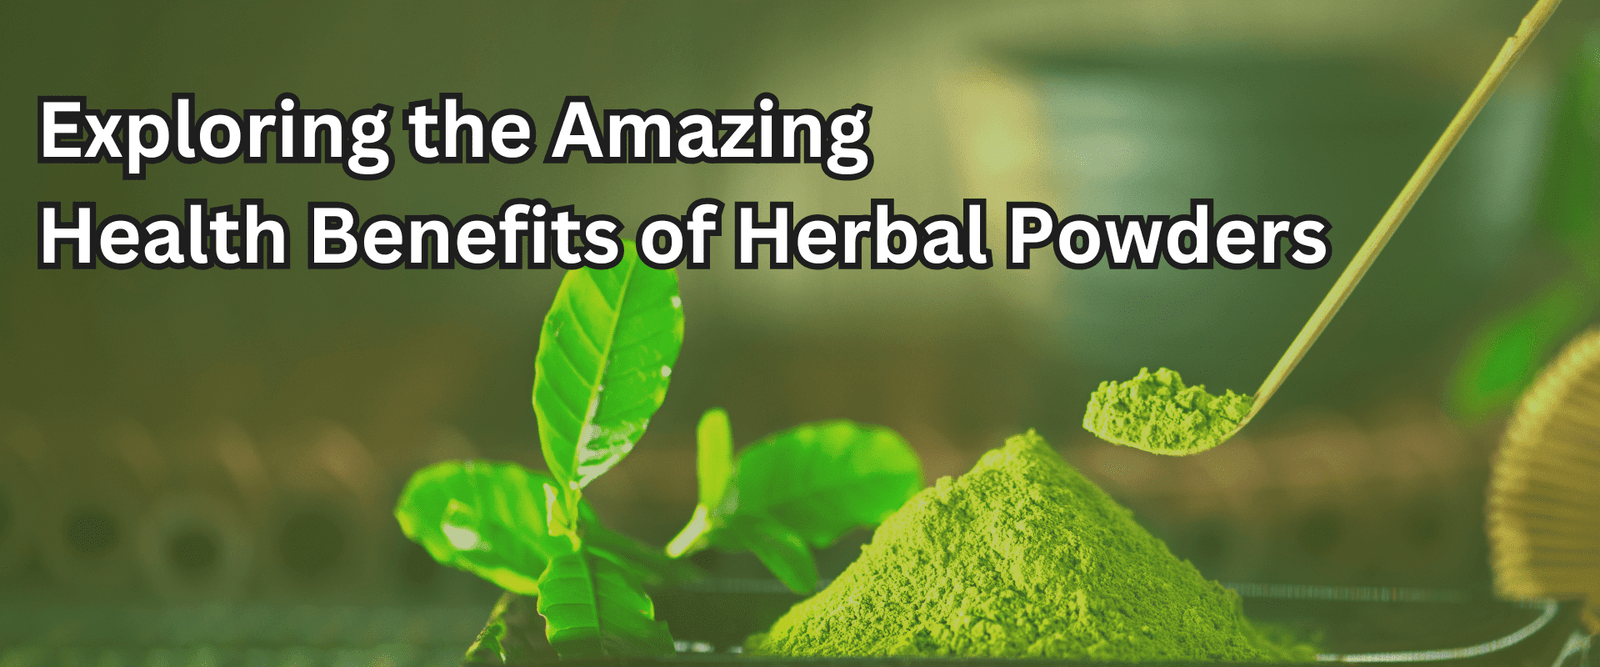 Exploring the Amazing Health Benefits of Herbal Powders